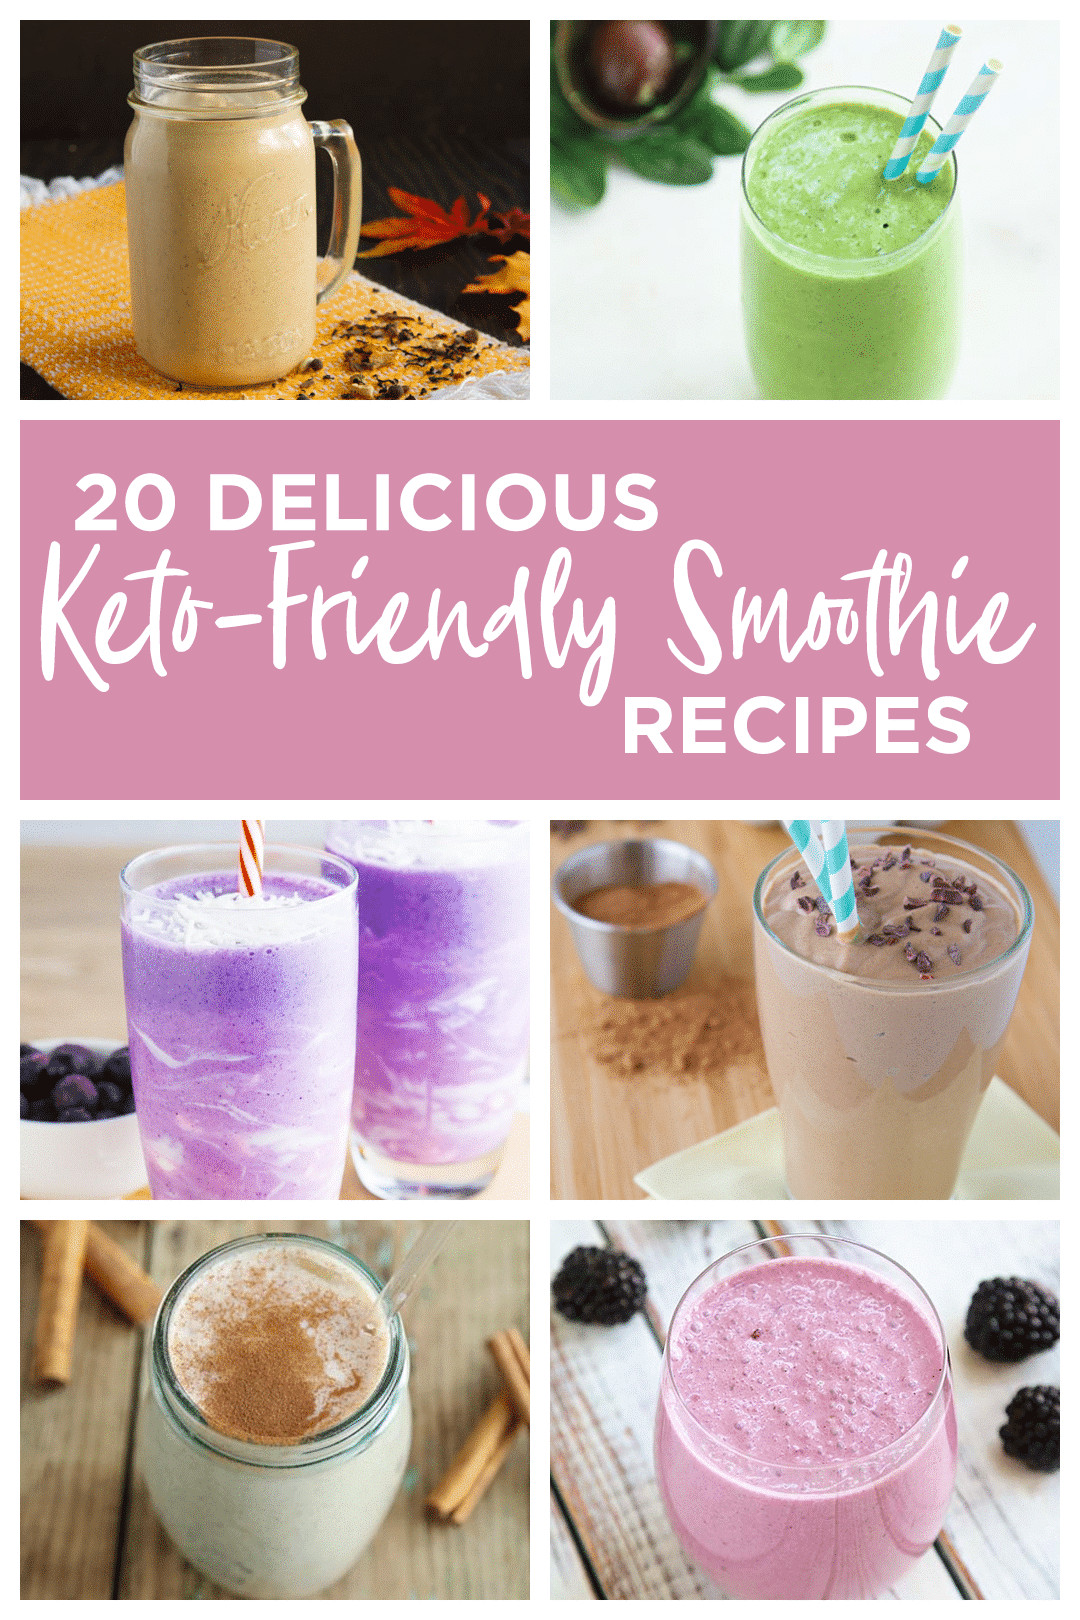 Healthy Keto Smoothie Recipes
 Easy Keto Smoothie Recipes 20 Delicious Recipes